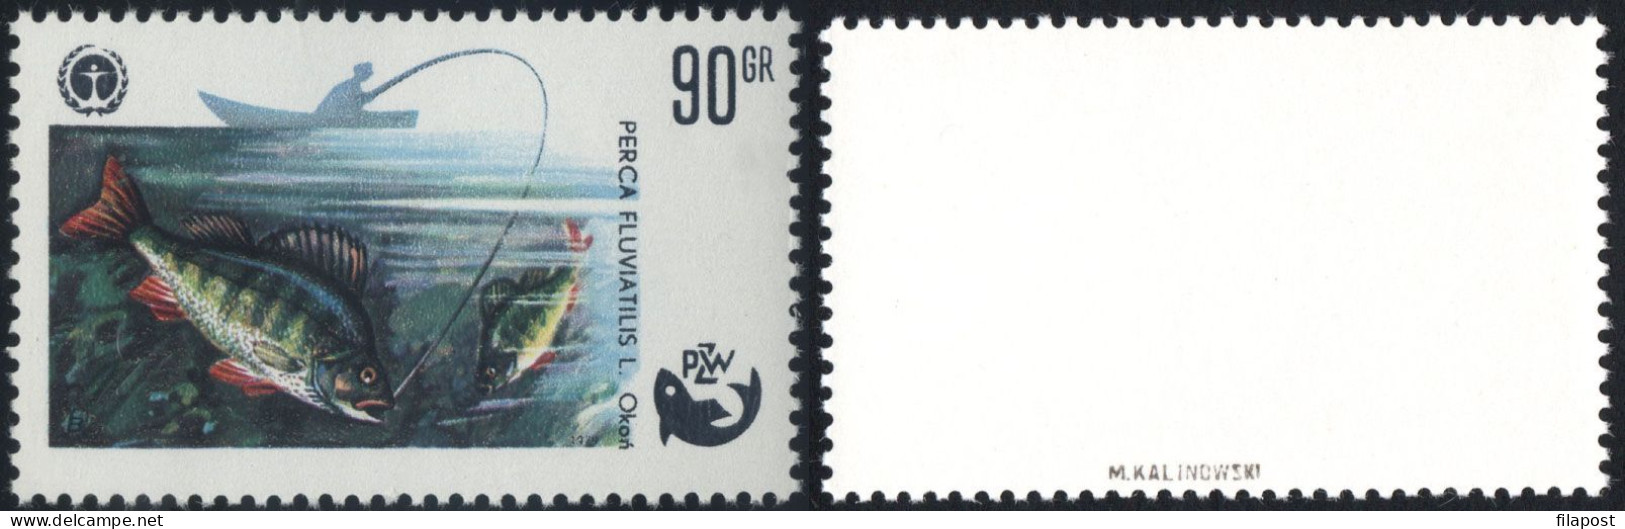 POLAND 1979 100 Years Of Polish Angling Unprinted Grey Colour Stamp - No Inscription POLAND Kalinowski Guarantee MNH ** - Variedades & Curiosidades